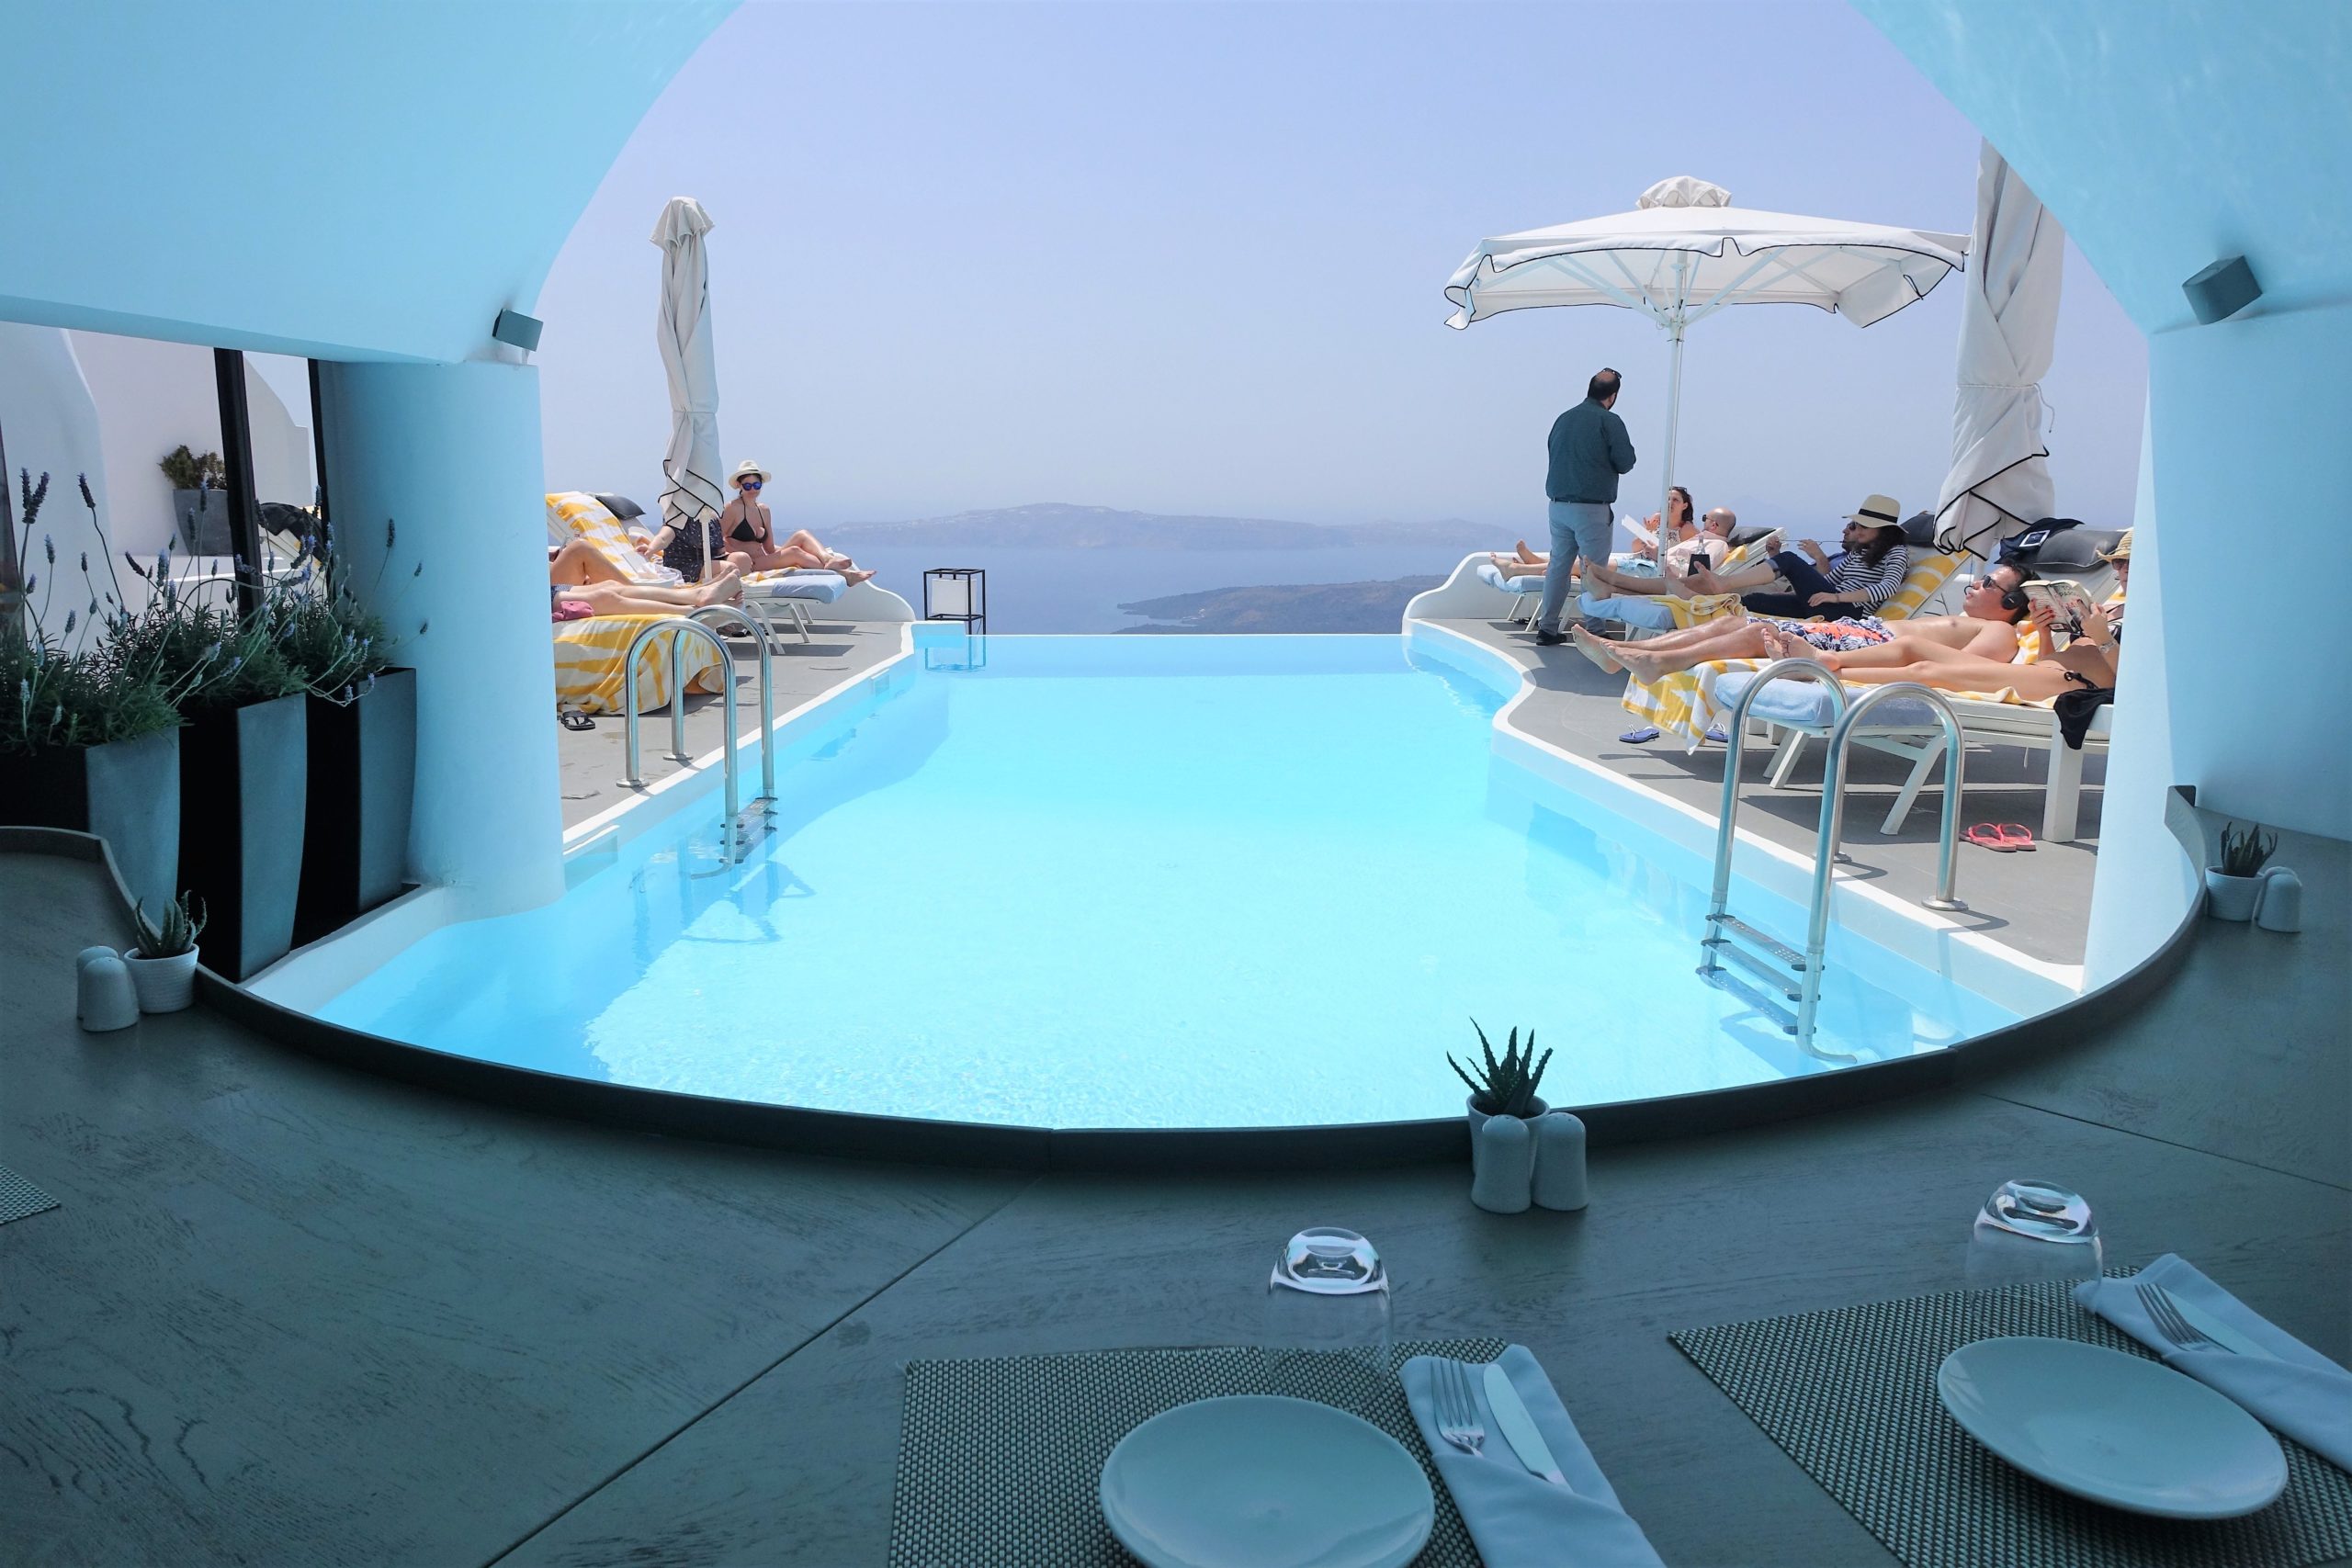 The infinity pool at Chromata Hotel